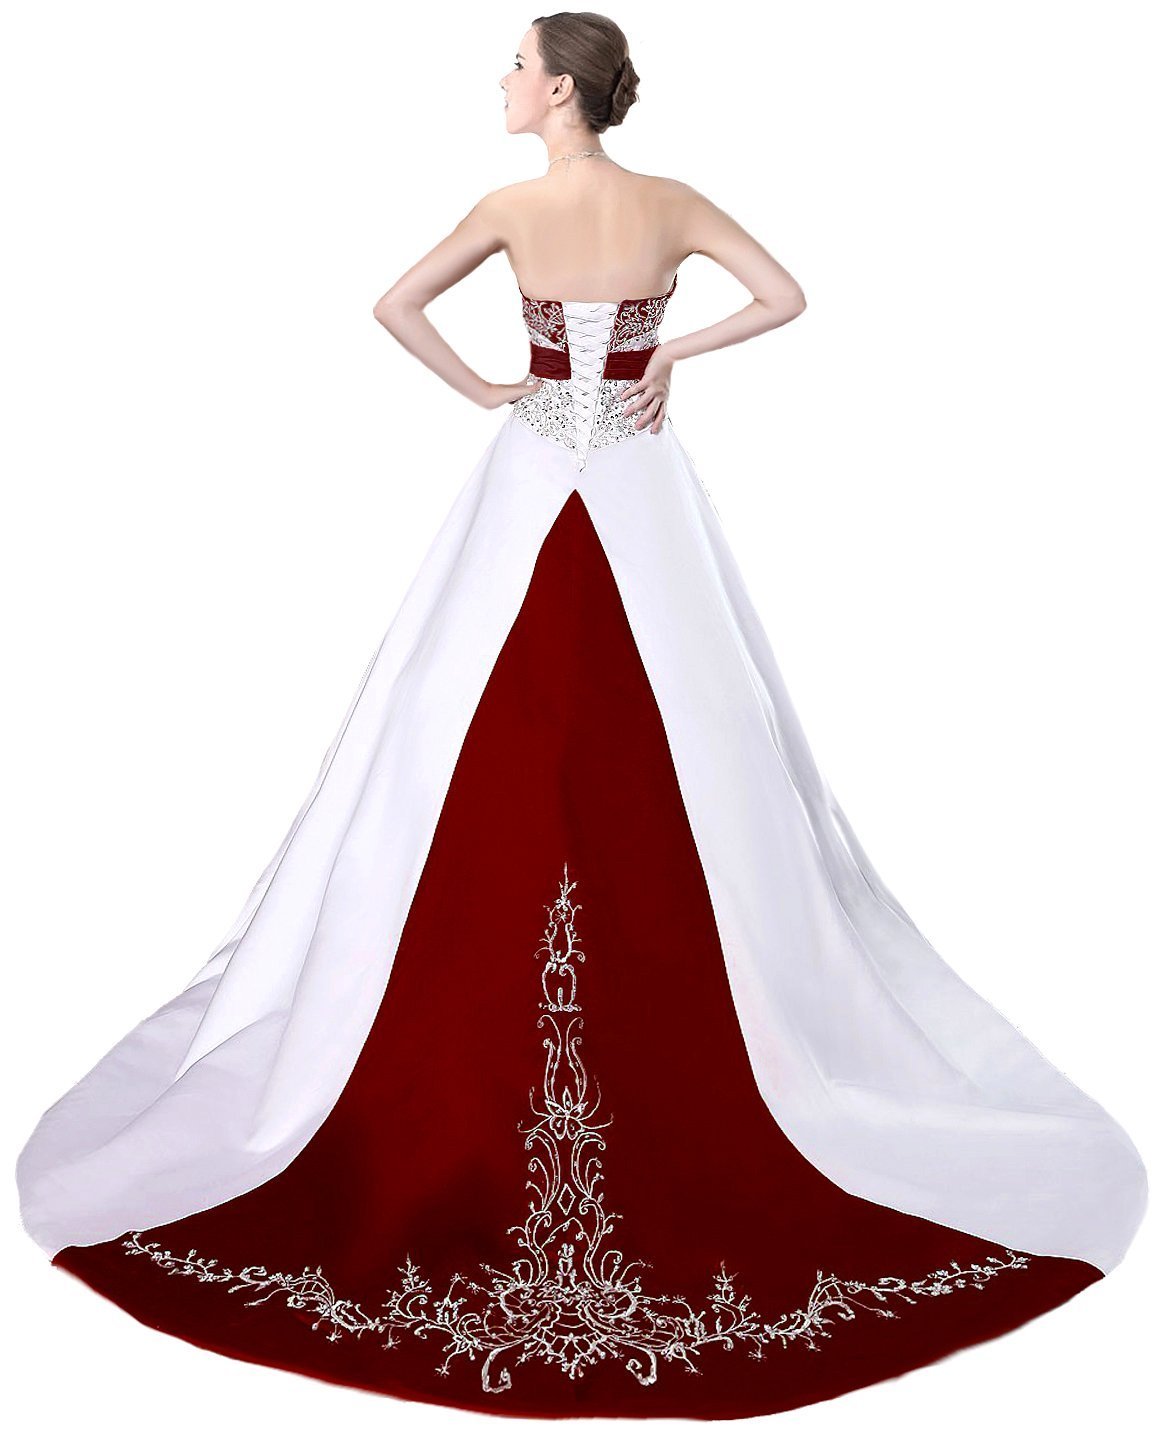 Burgundy and White Wedding Dress